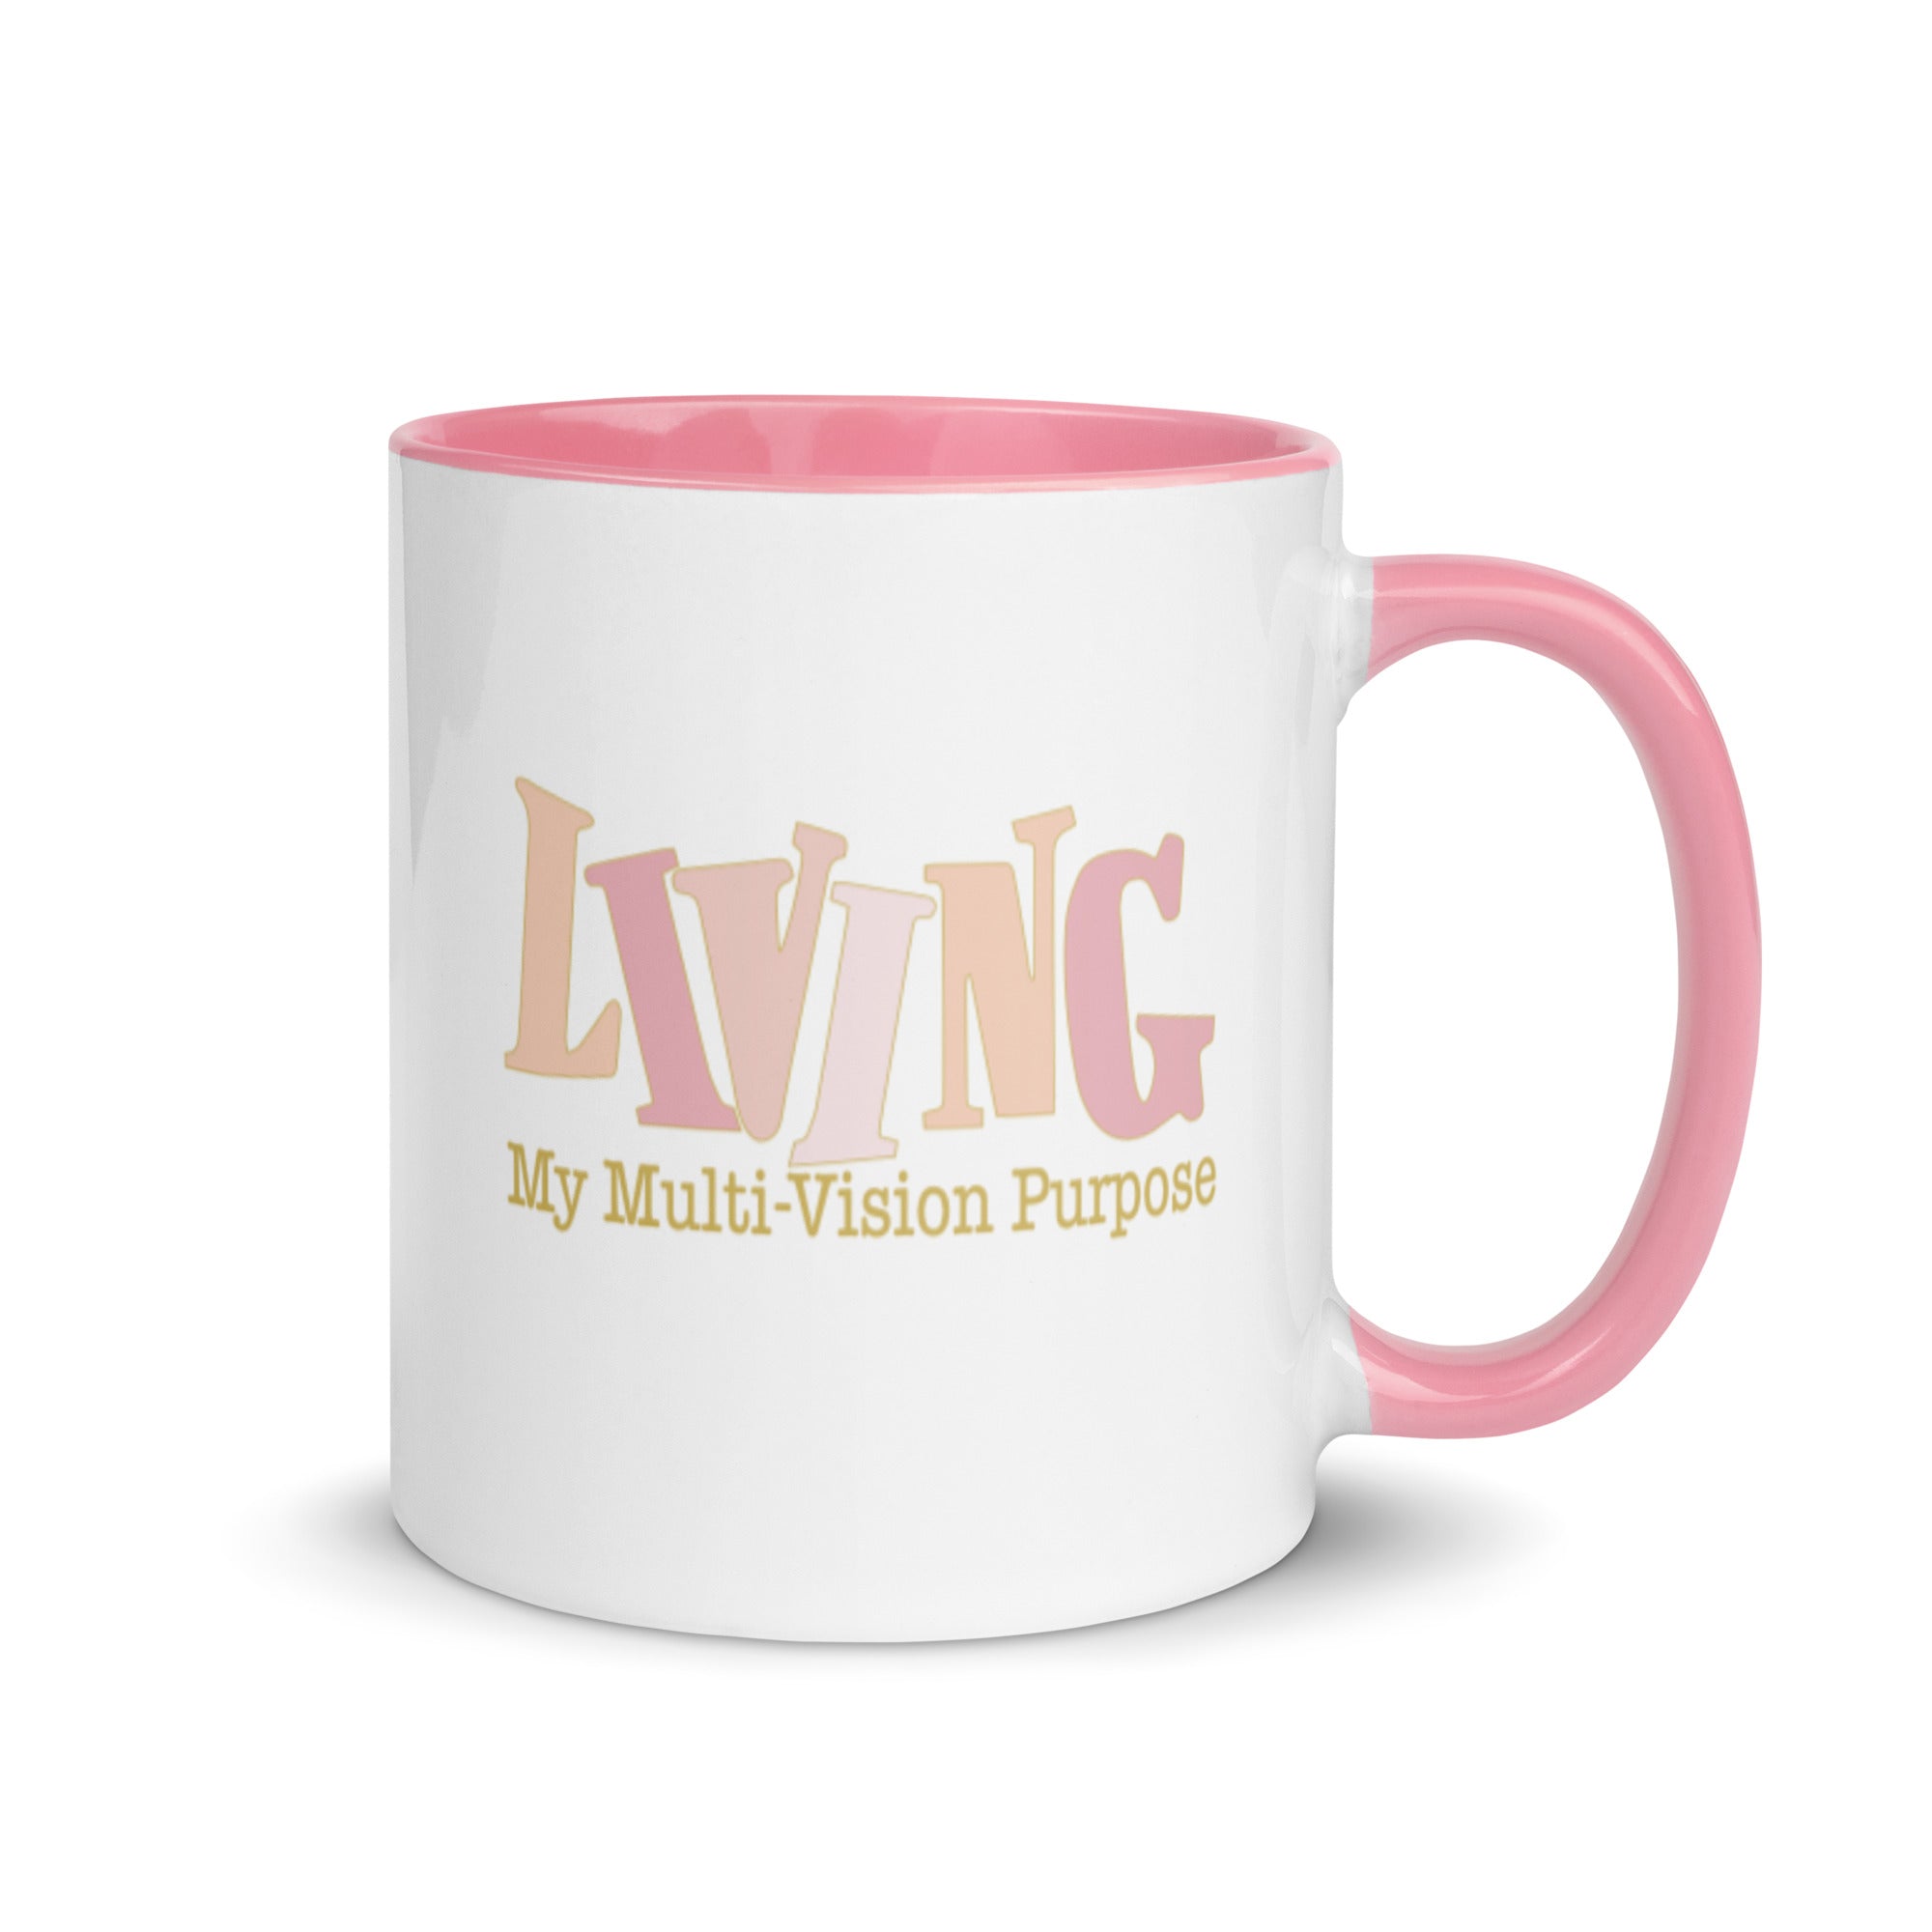 Living My Multi-Vision Purpose Mug With Color Inside